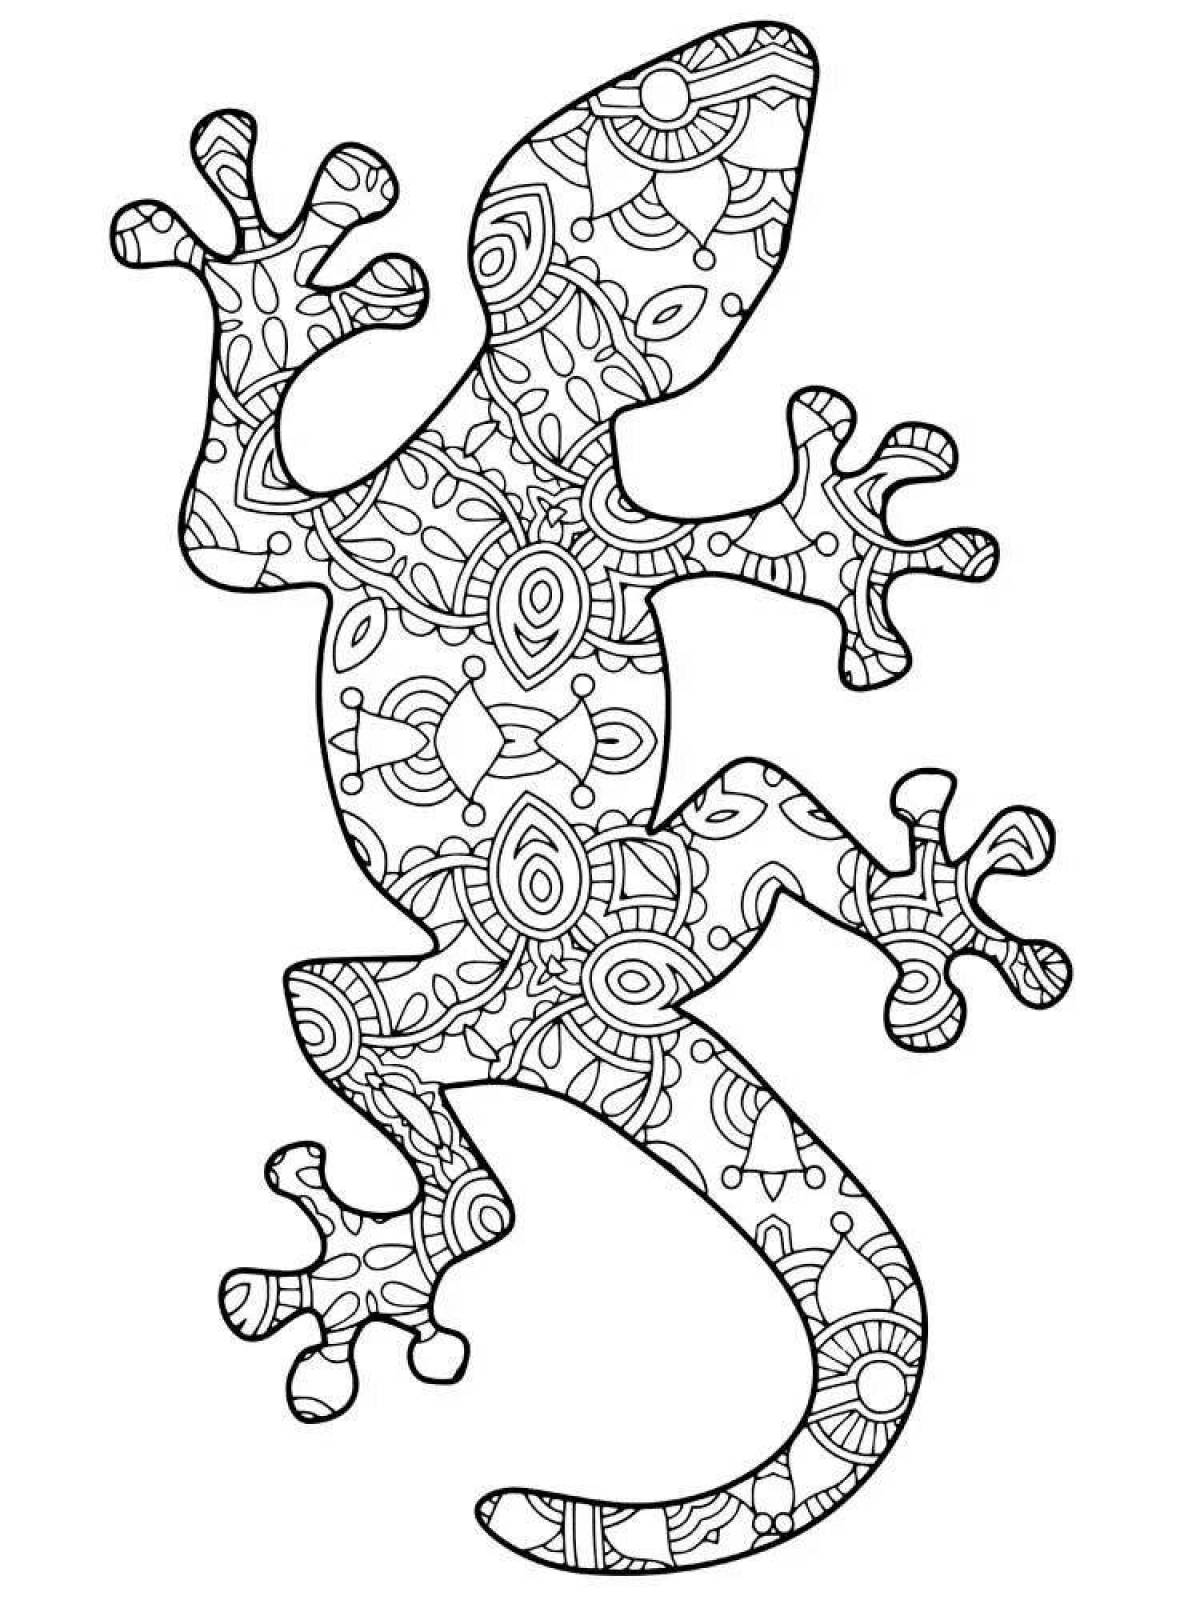 Great lizard coloring book